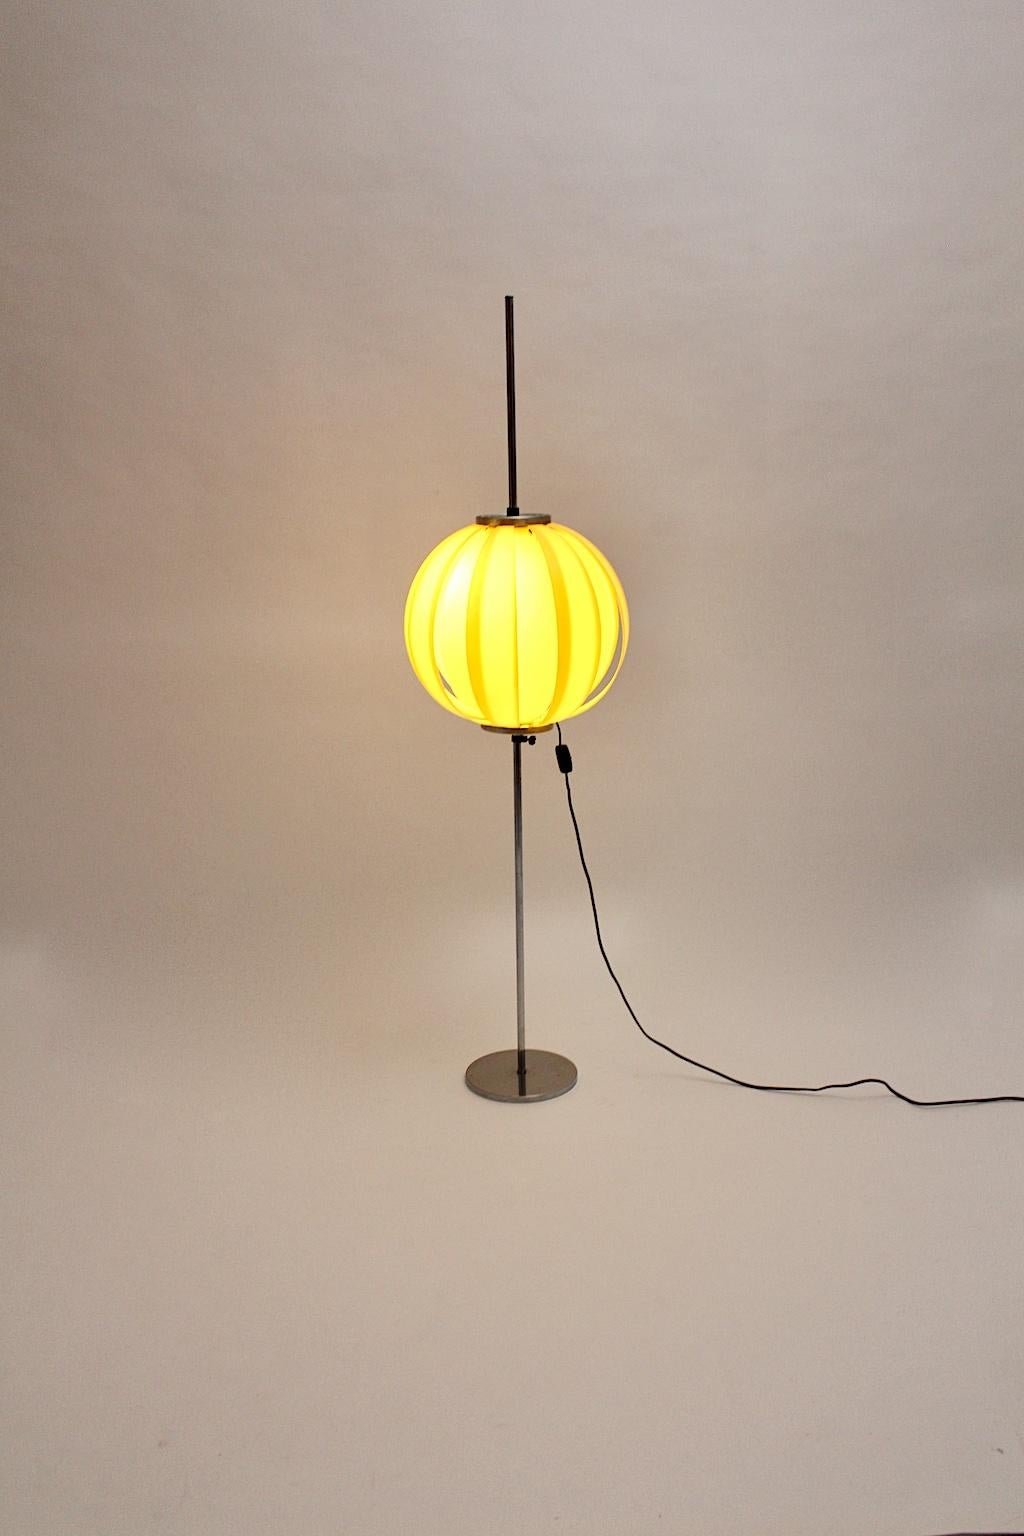 plastic ball lamp